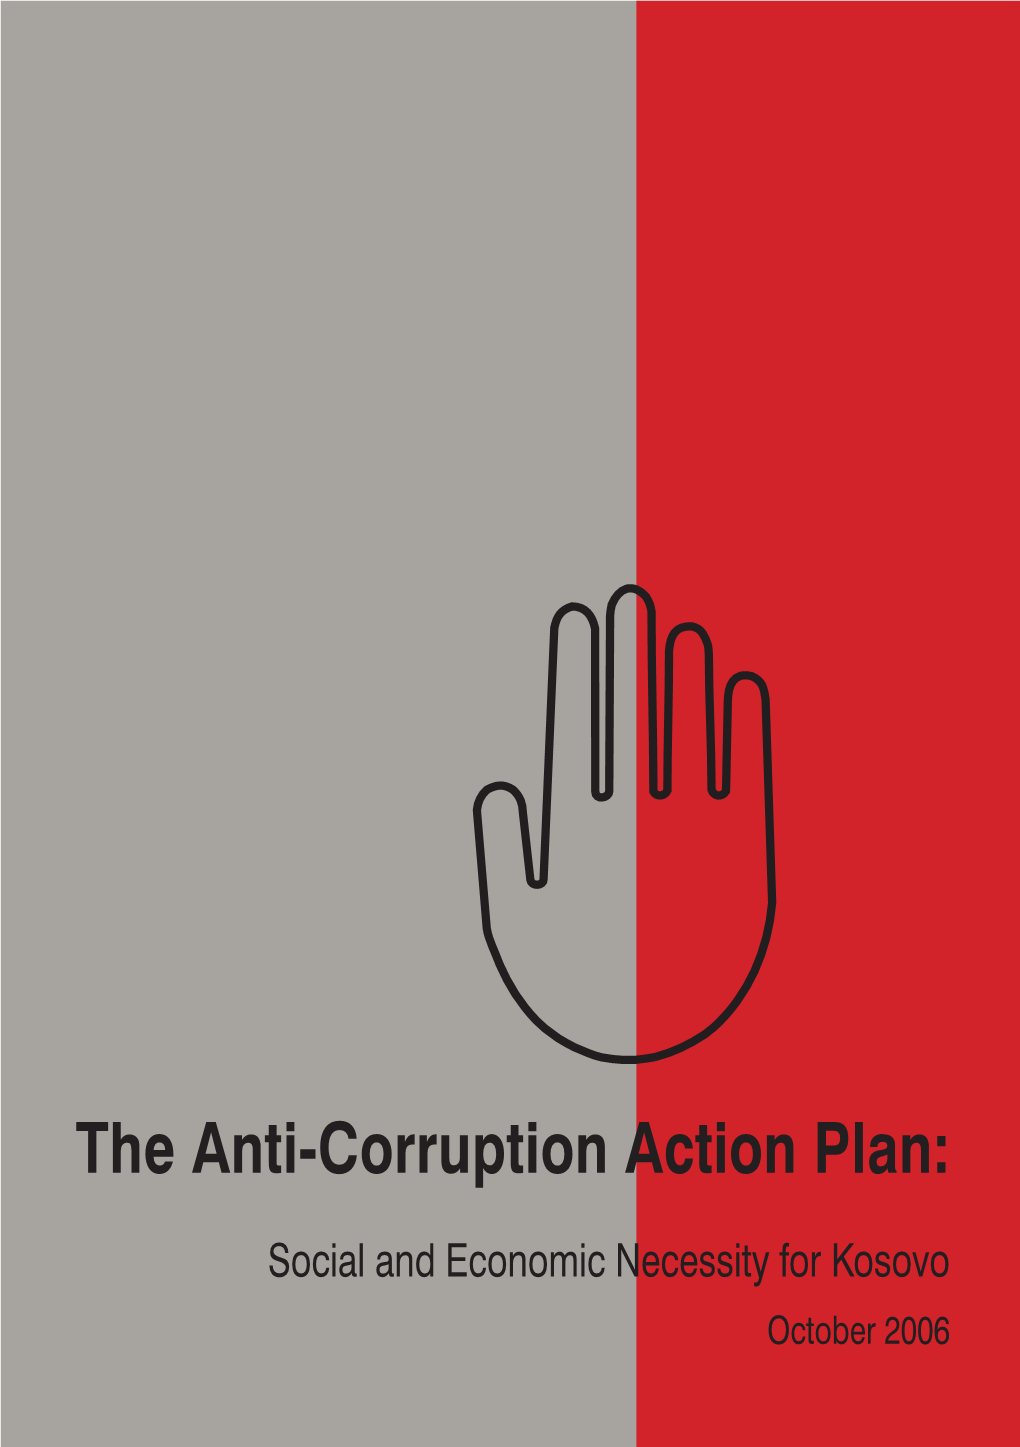 The Anti-Corruption Action Plan